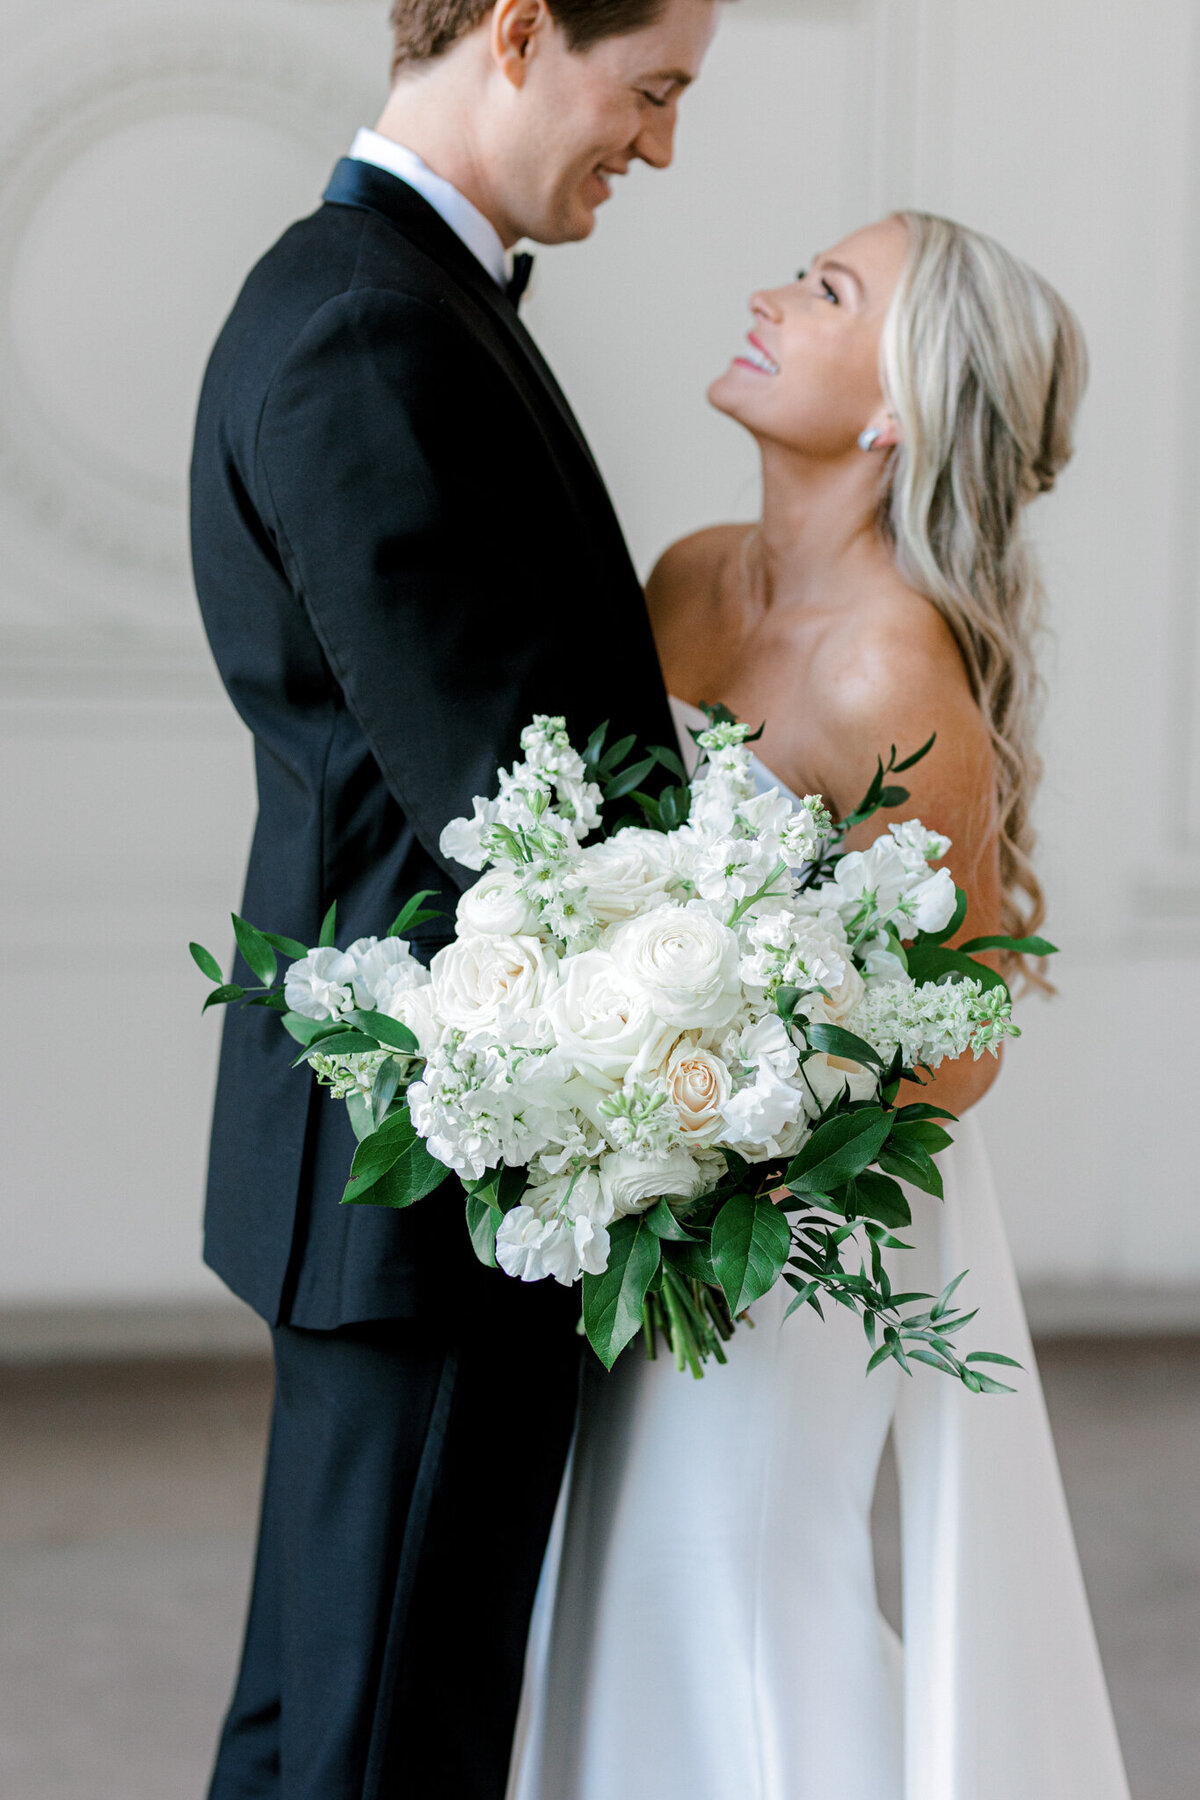 Madison & Michael's Wedding at Union Station | Dallas Wedding Photographer | Sami Kathryn Photography-62